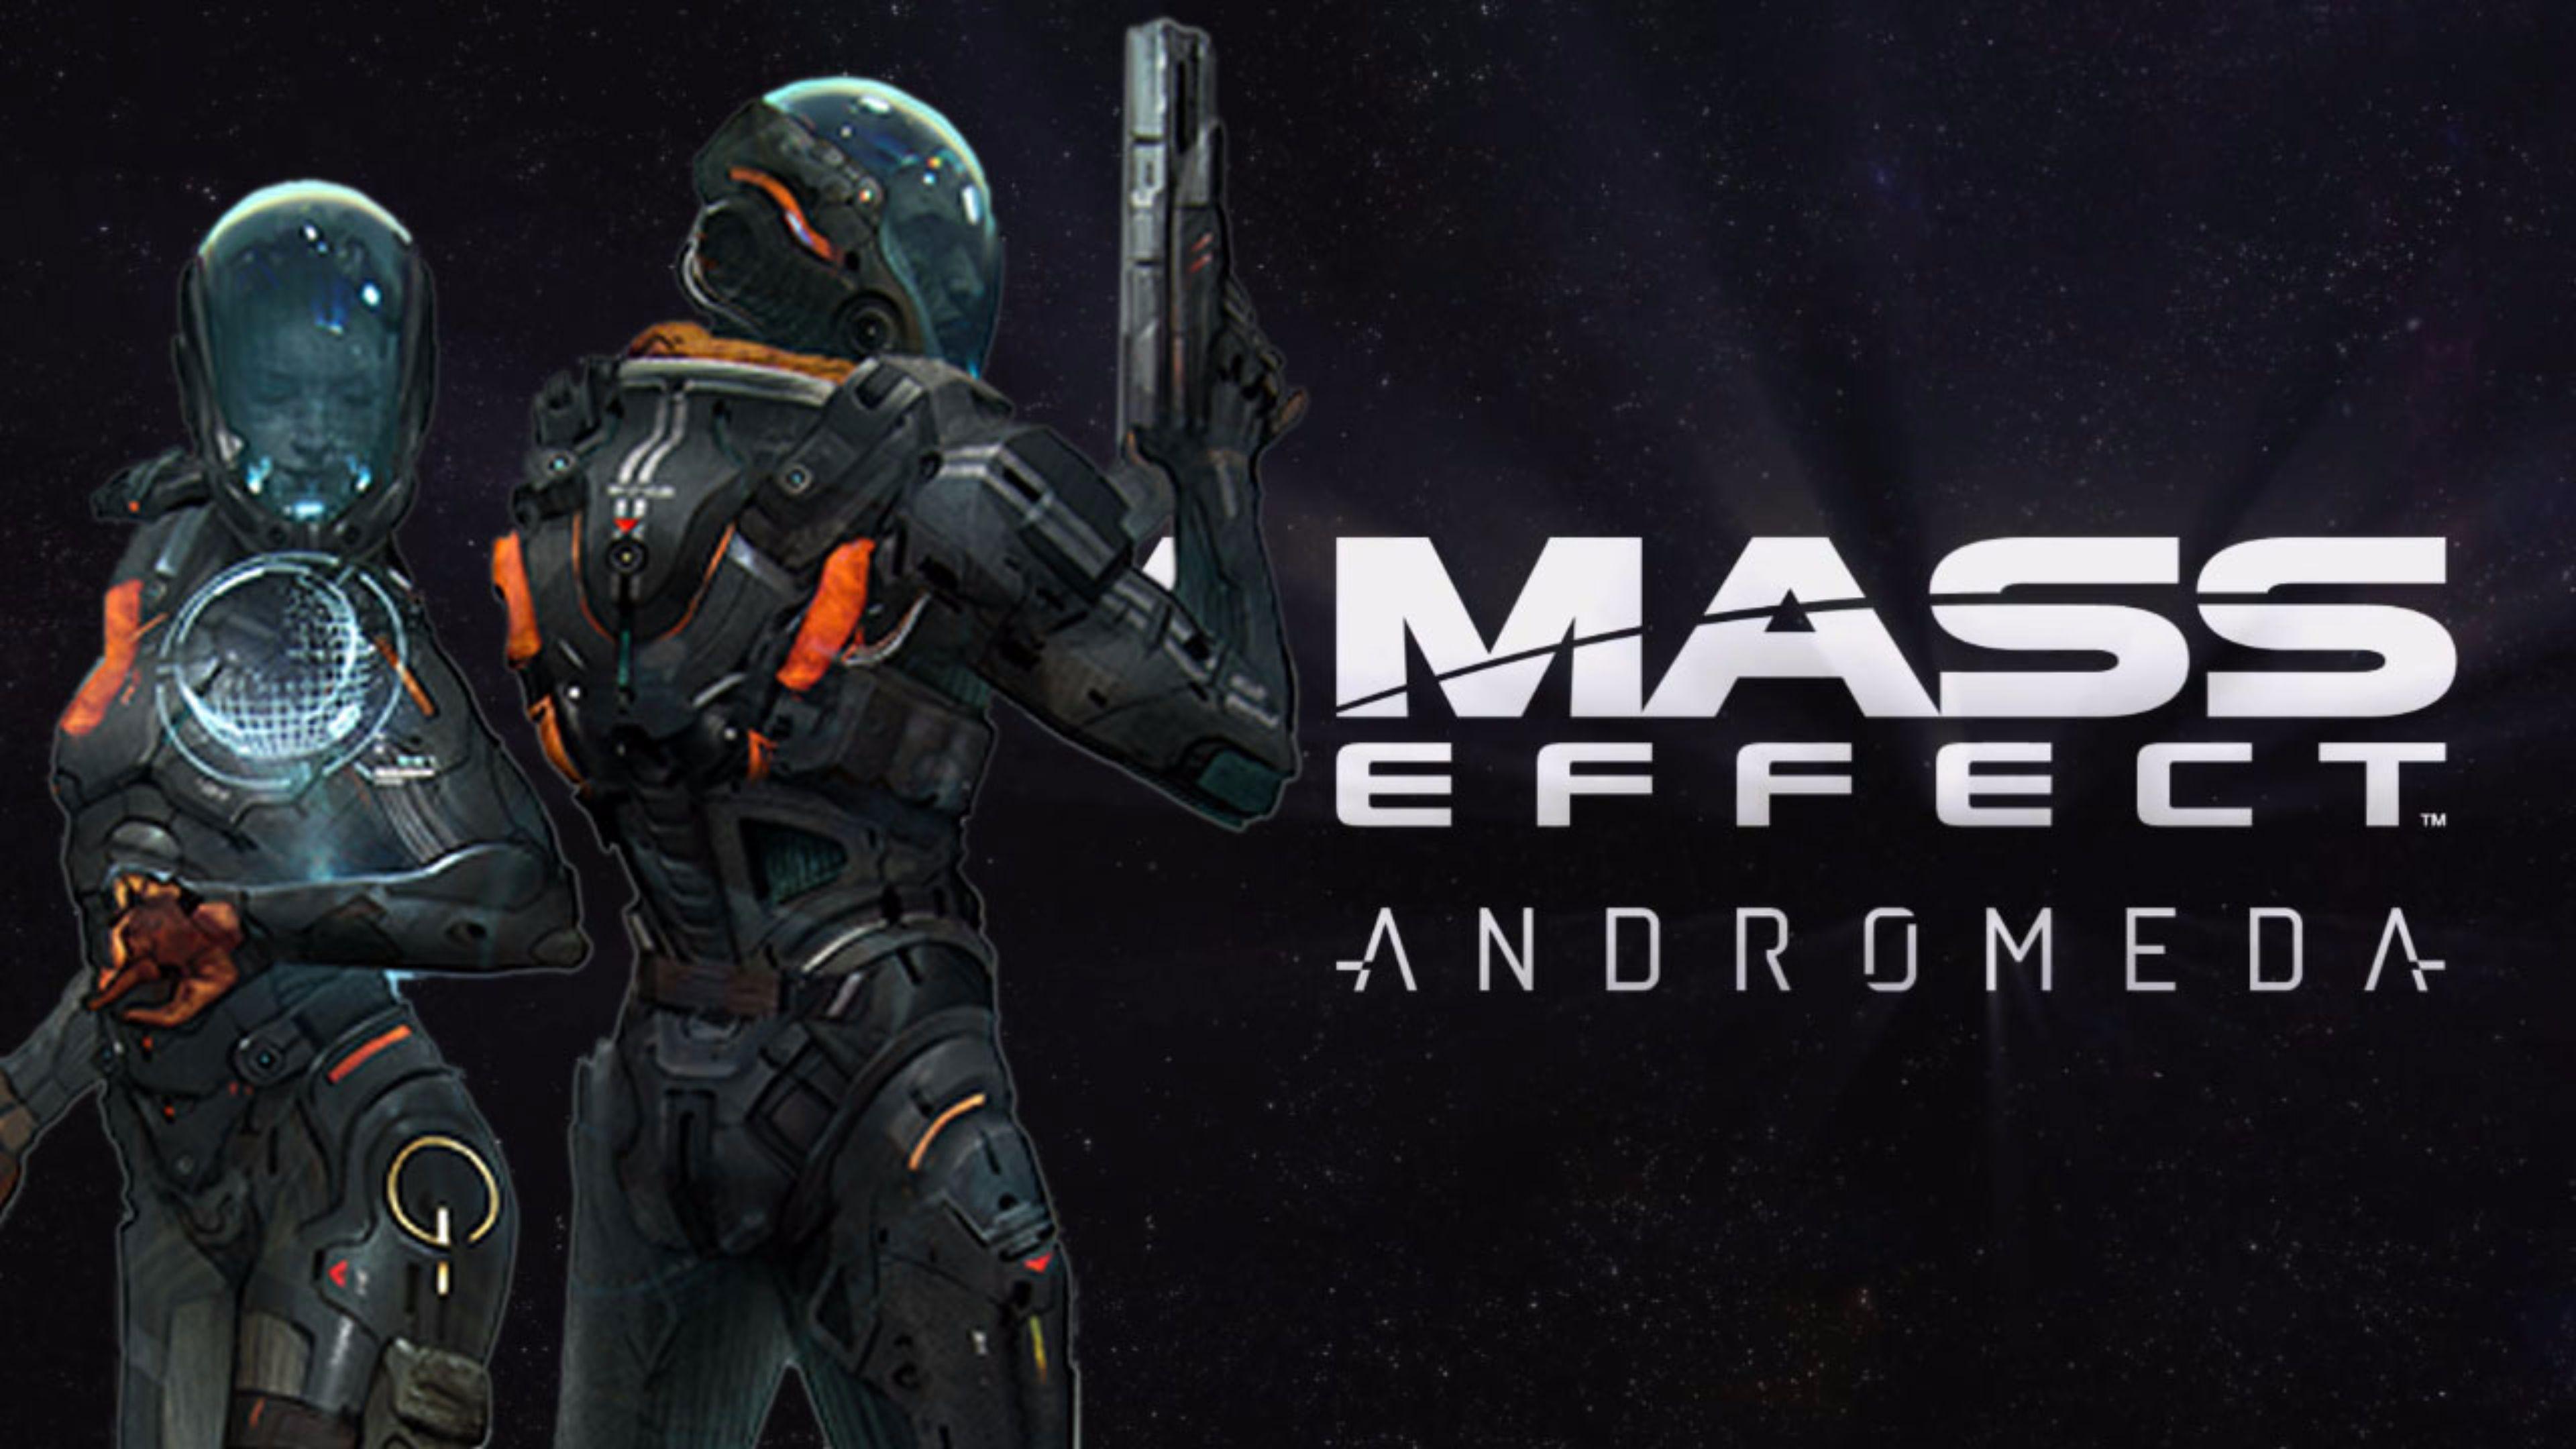 Mass Effect Andromeda Wallpaper in Ultra HDK